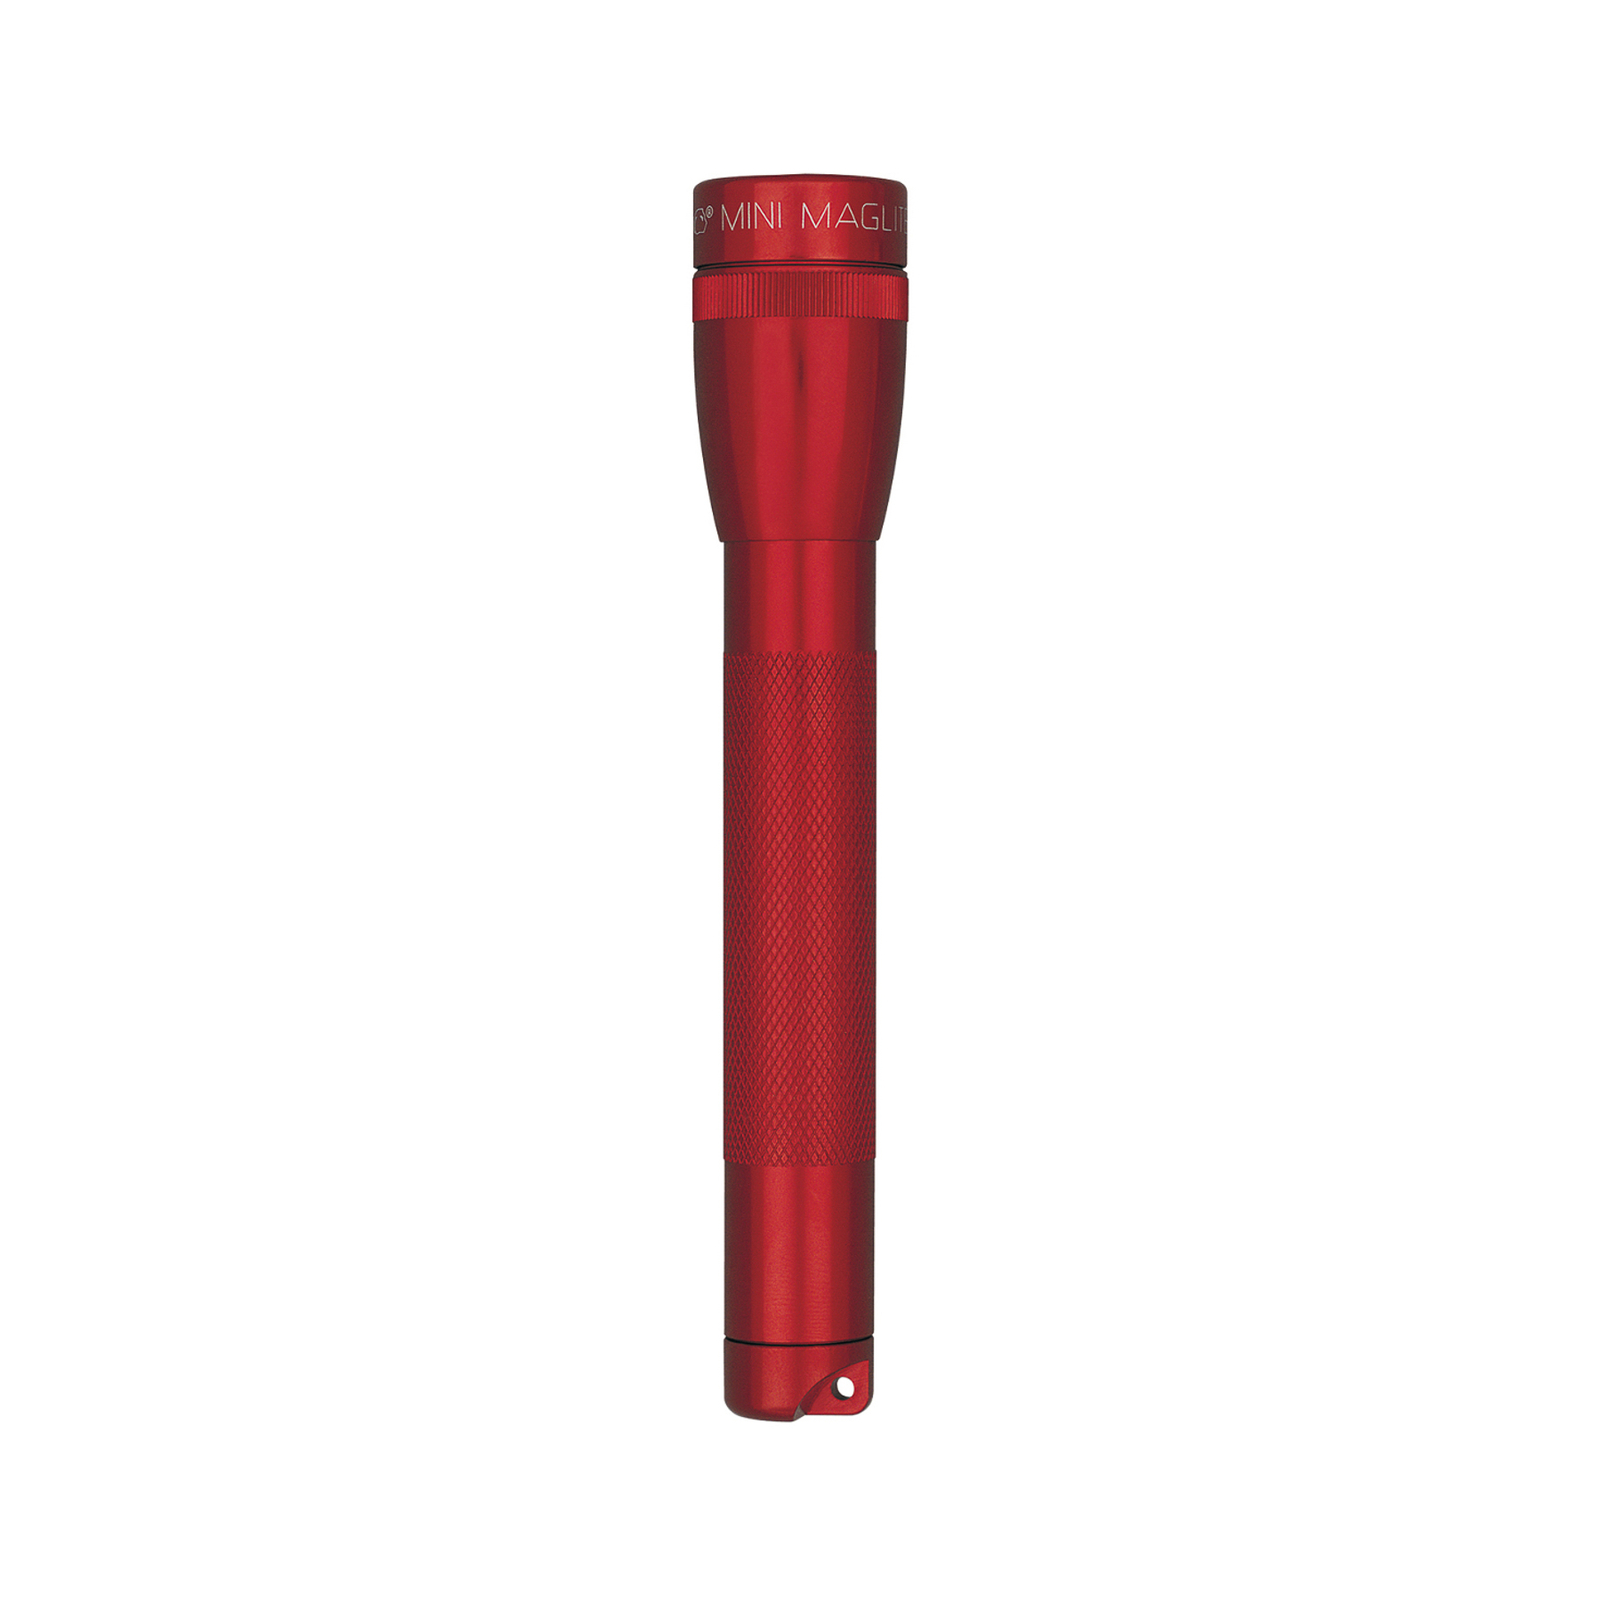 Maglite Xenon lommelygte Mini, 2-Cell AA, med æske, rød